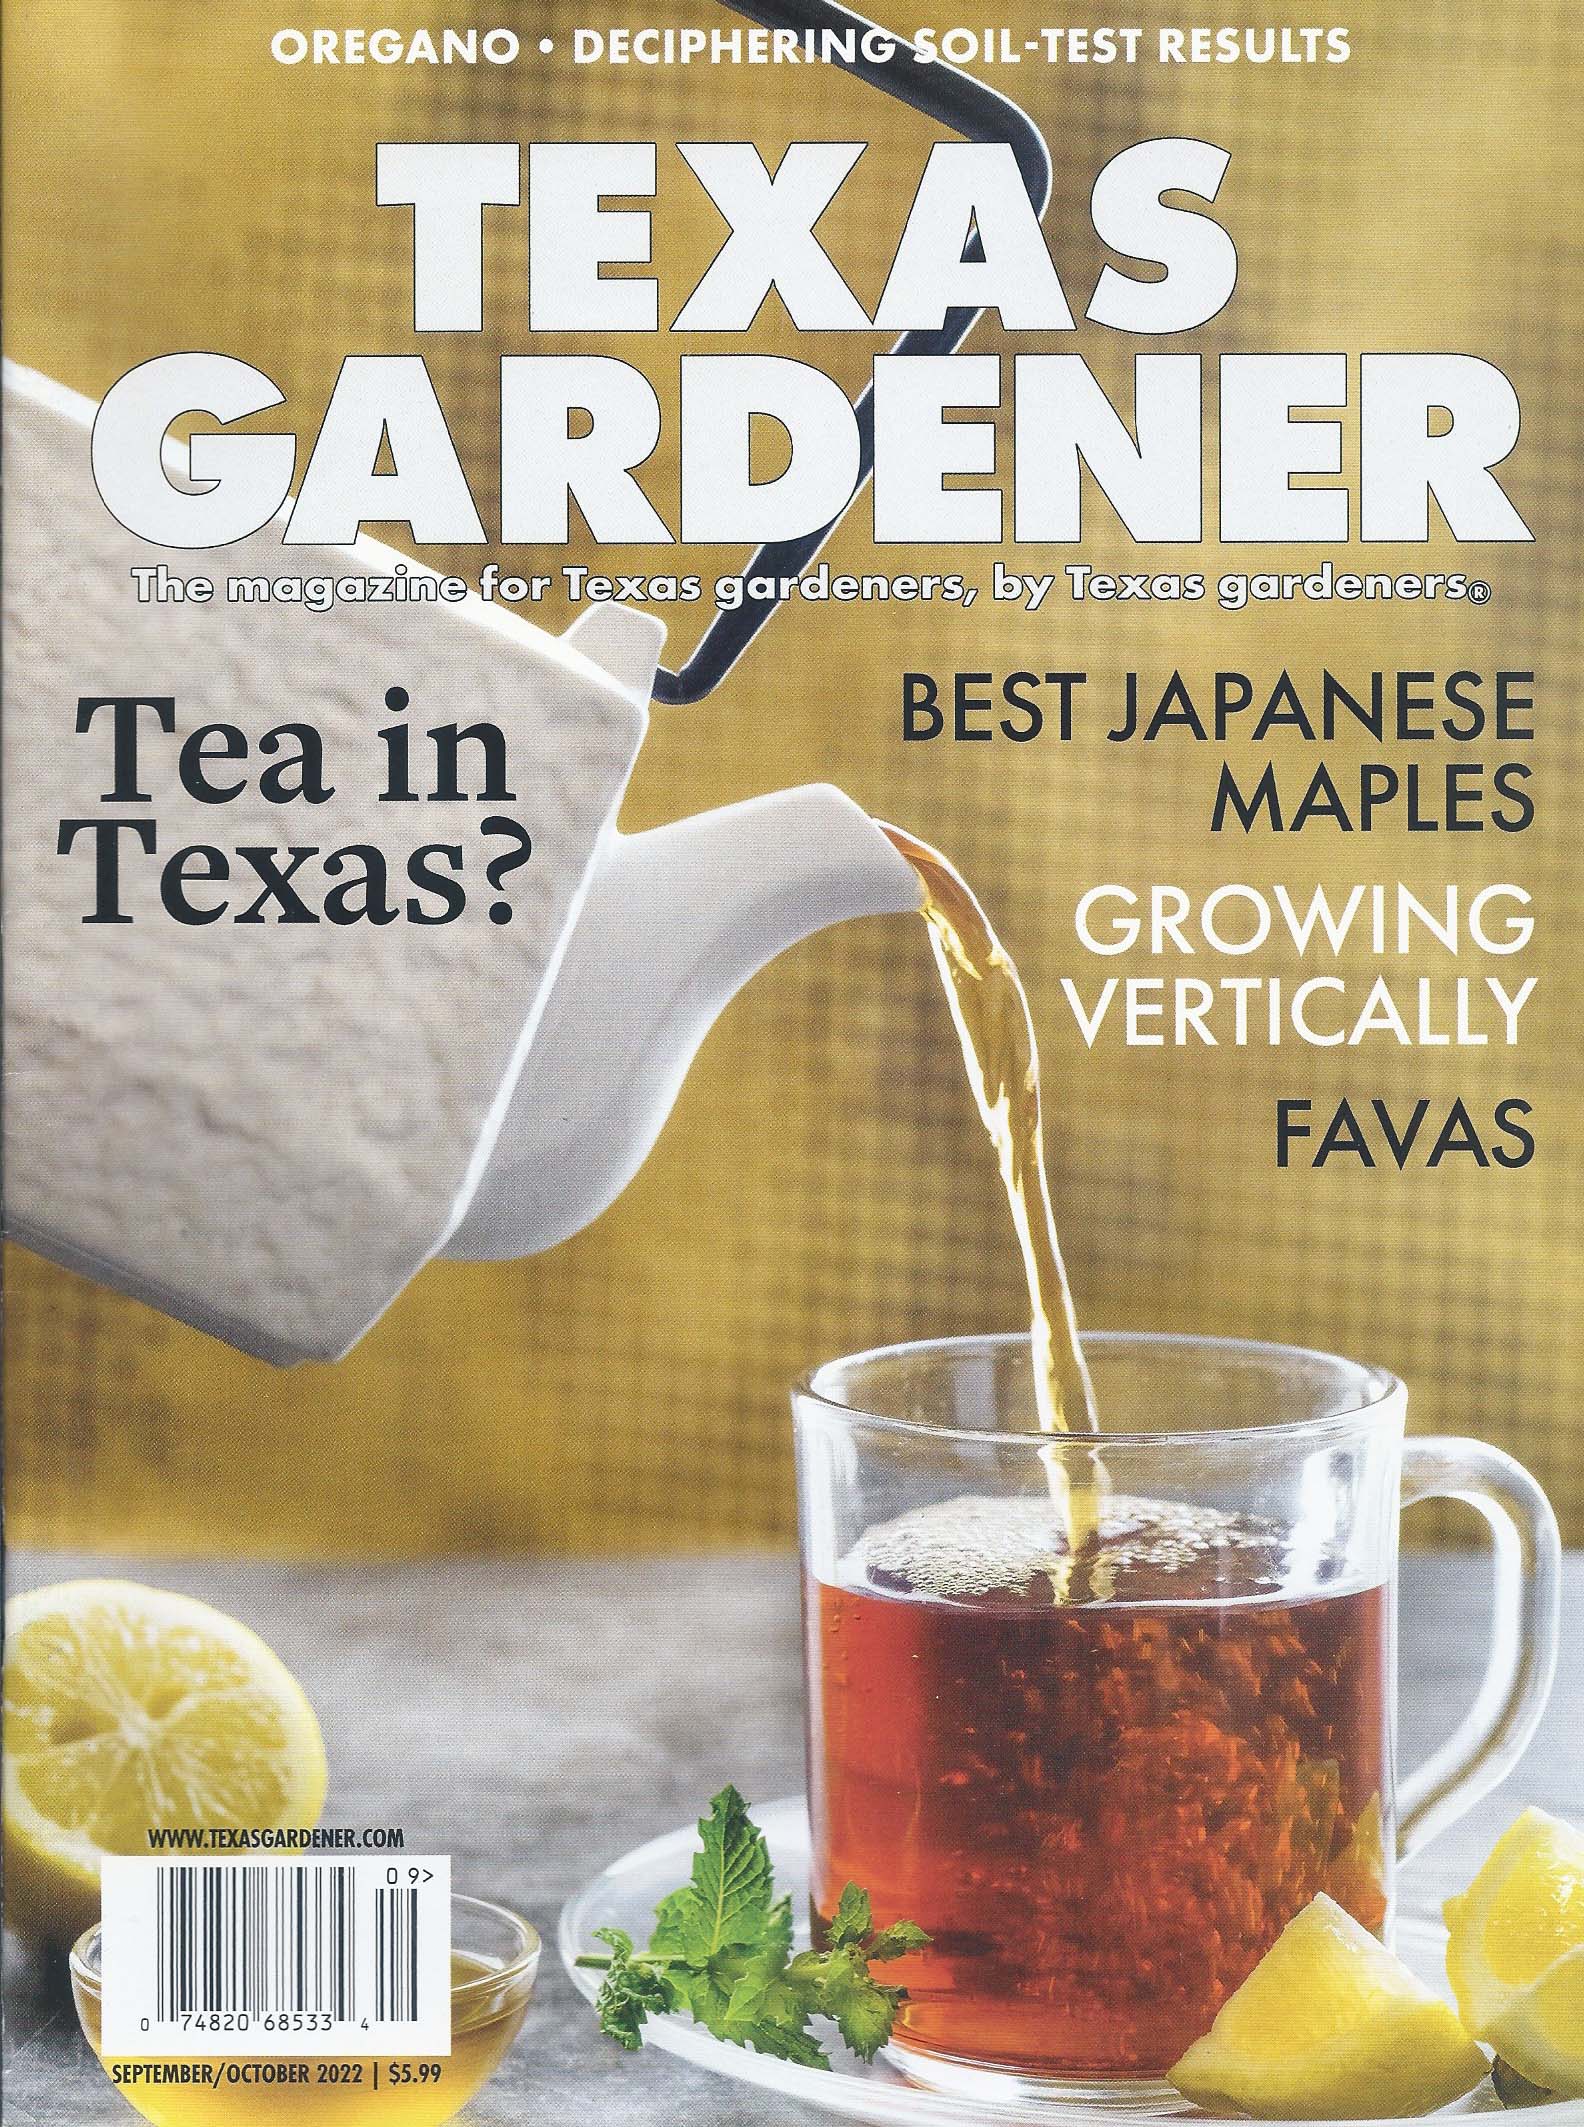 Texas Gardener magazine cover tea time